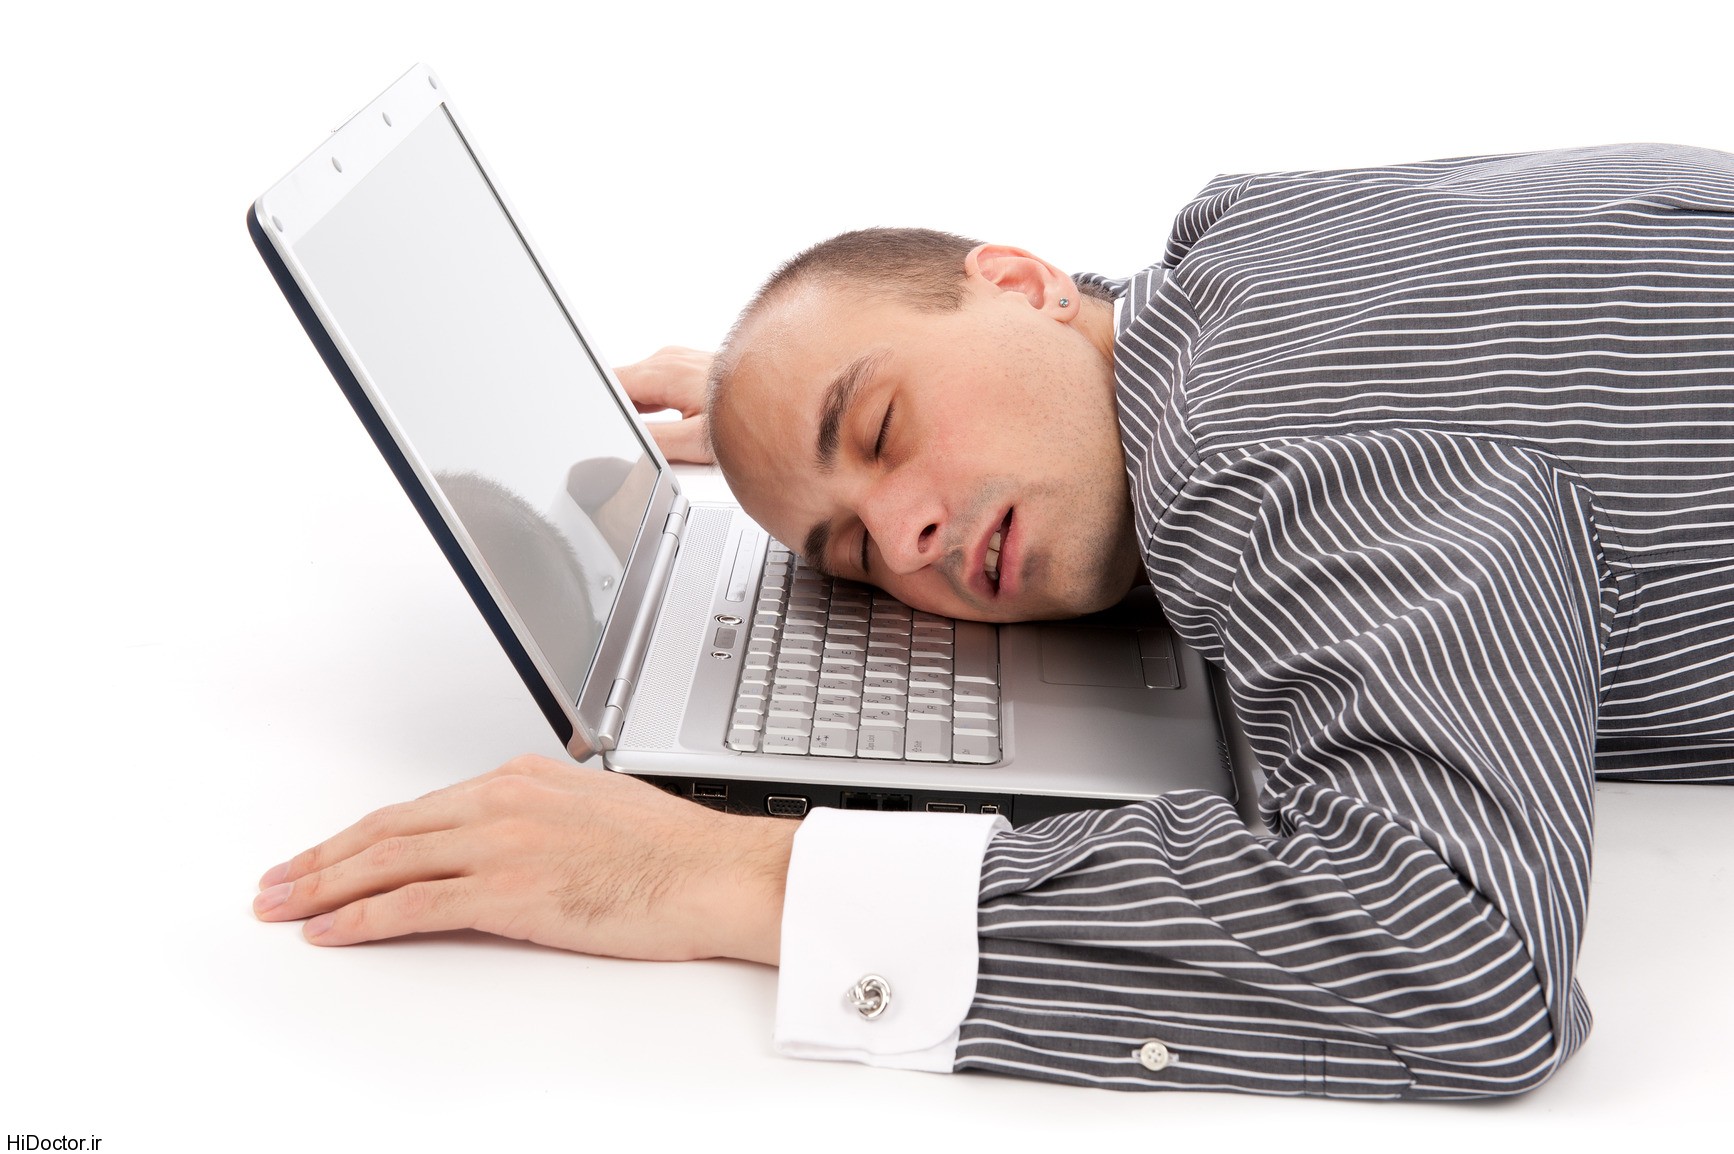 businessman sleeping on laptop